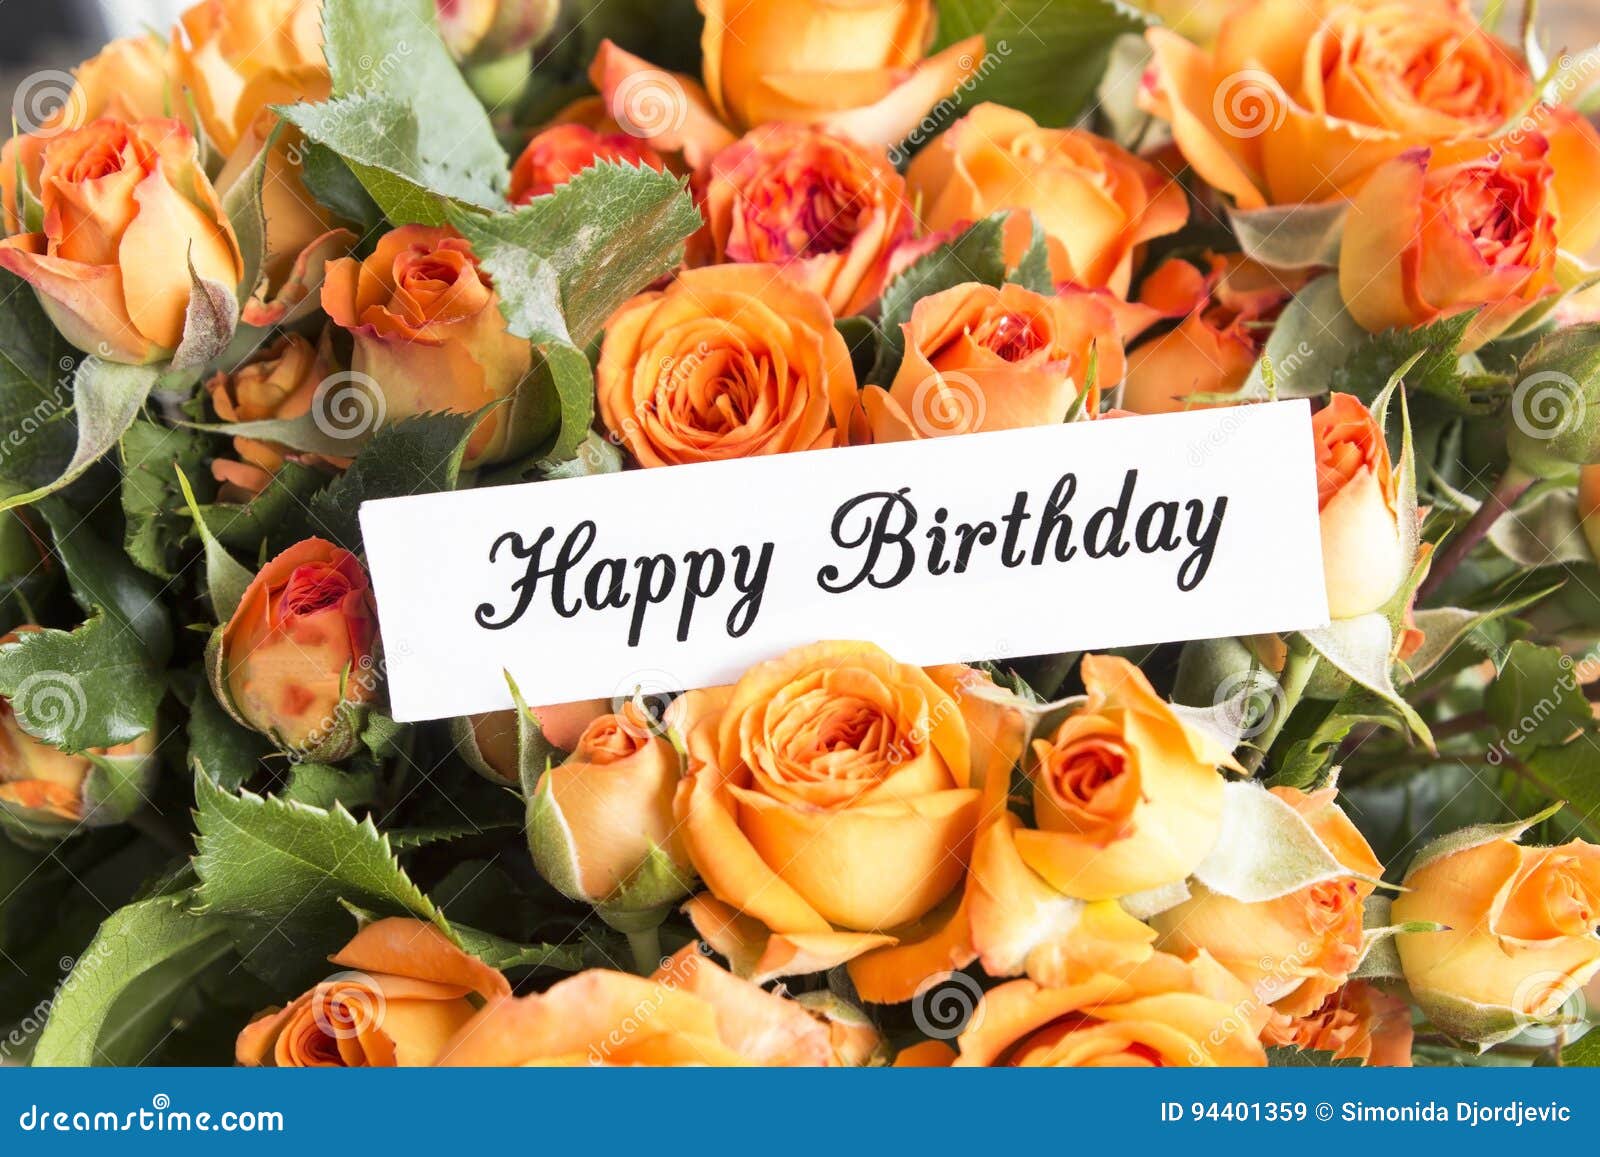 22,745 Happy Birthday Roses Stock Photos - Free & Royalty-Free Stock Photos  from Dreamstime